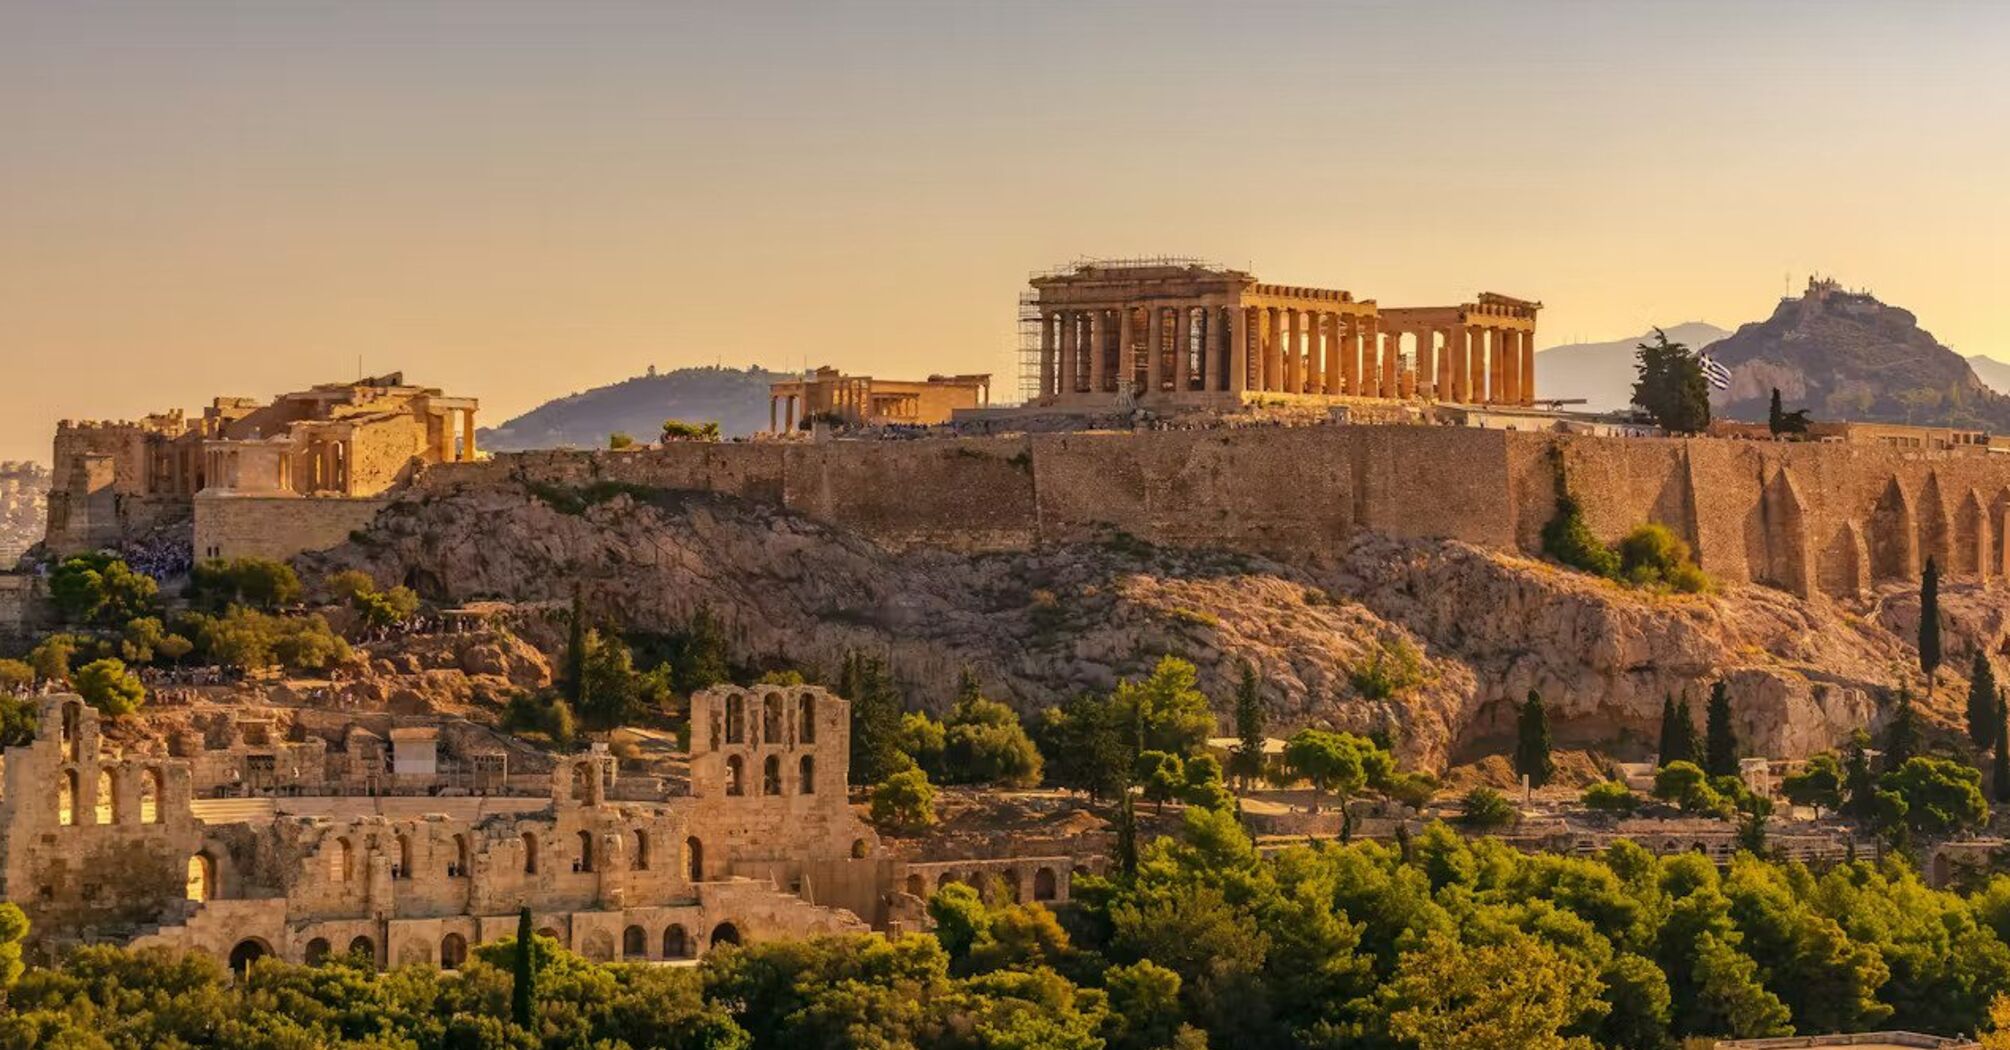 Shepherd's graffiti sheds new light on Acropolis lost temple mystery